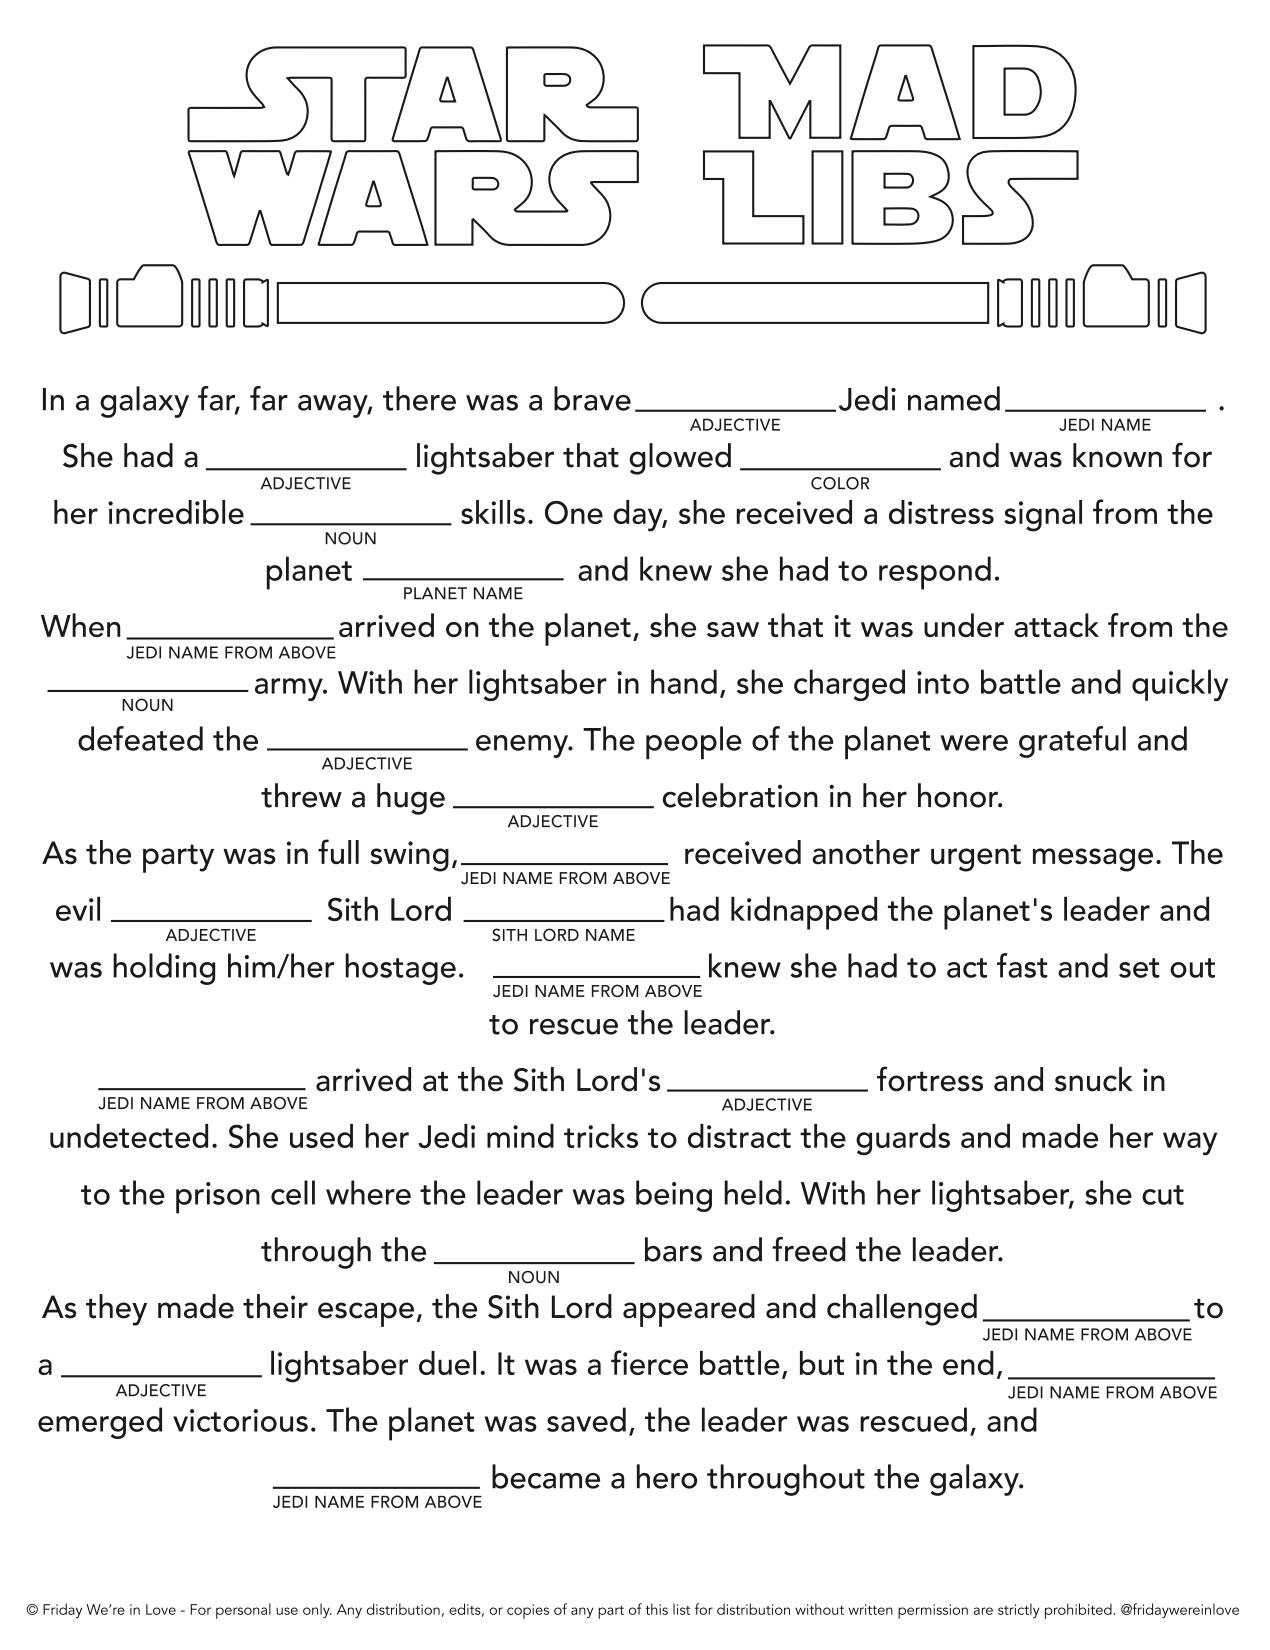 Star Wars Mad Libs printable download. 